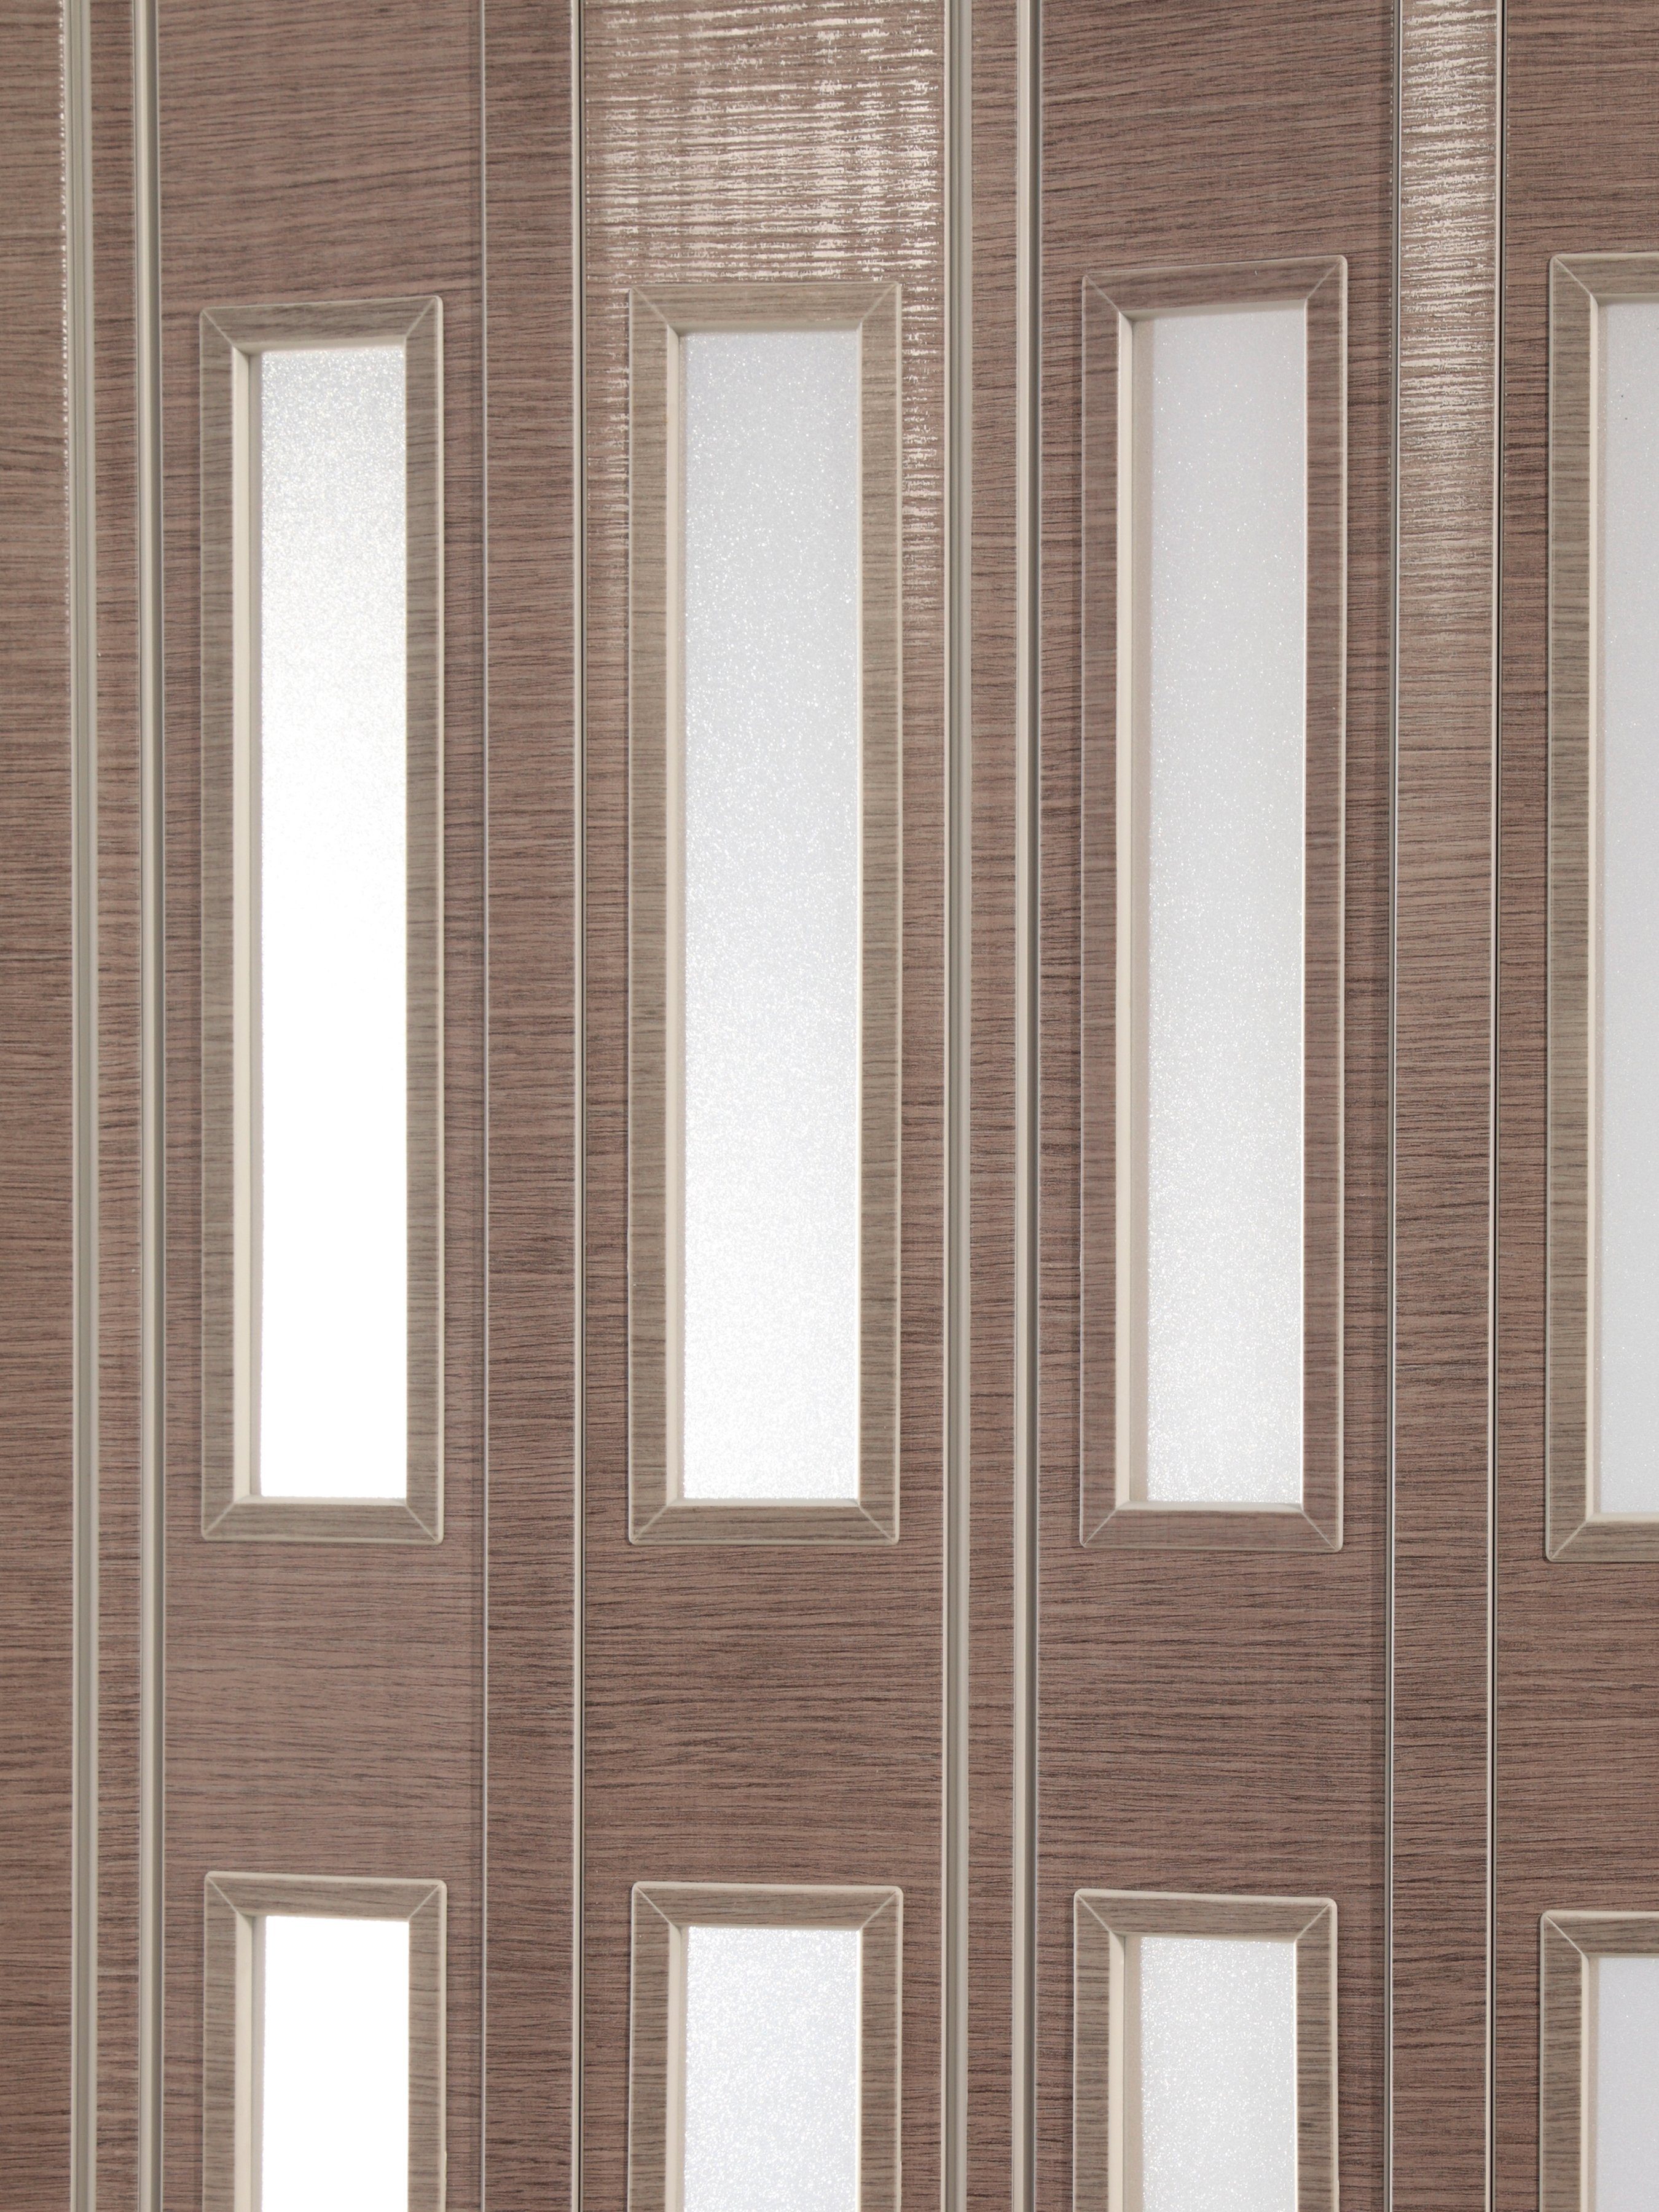 Forte Falttür Elvira, eiche taupe, x 87 m. satiniert, Fenster 202 4 cm Festmaß